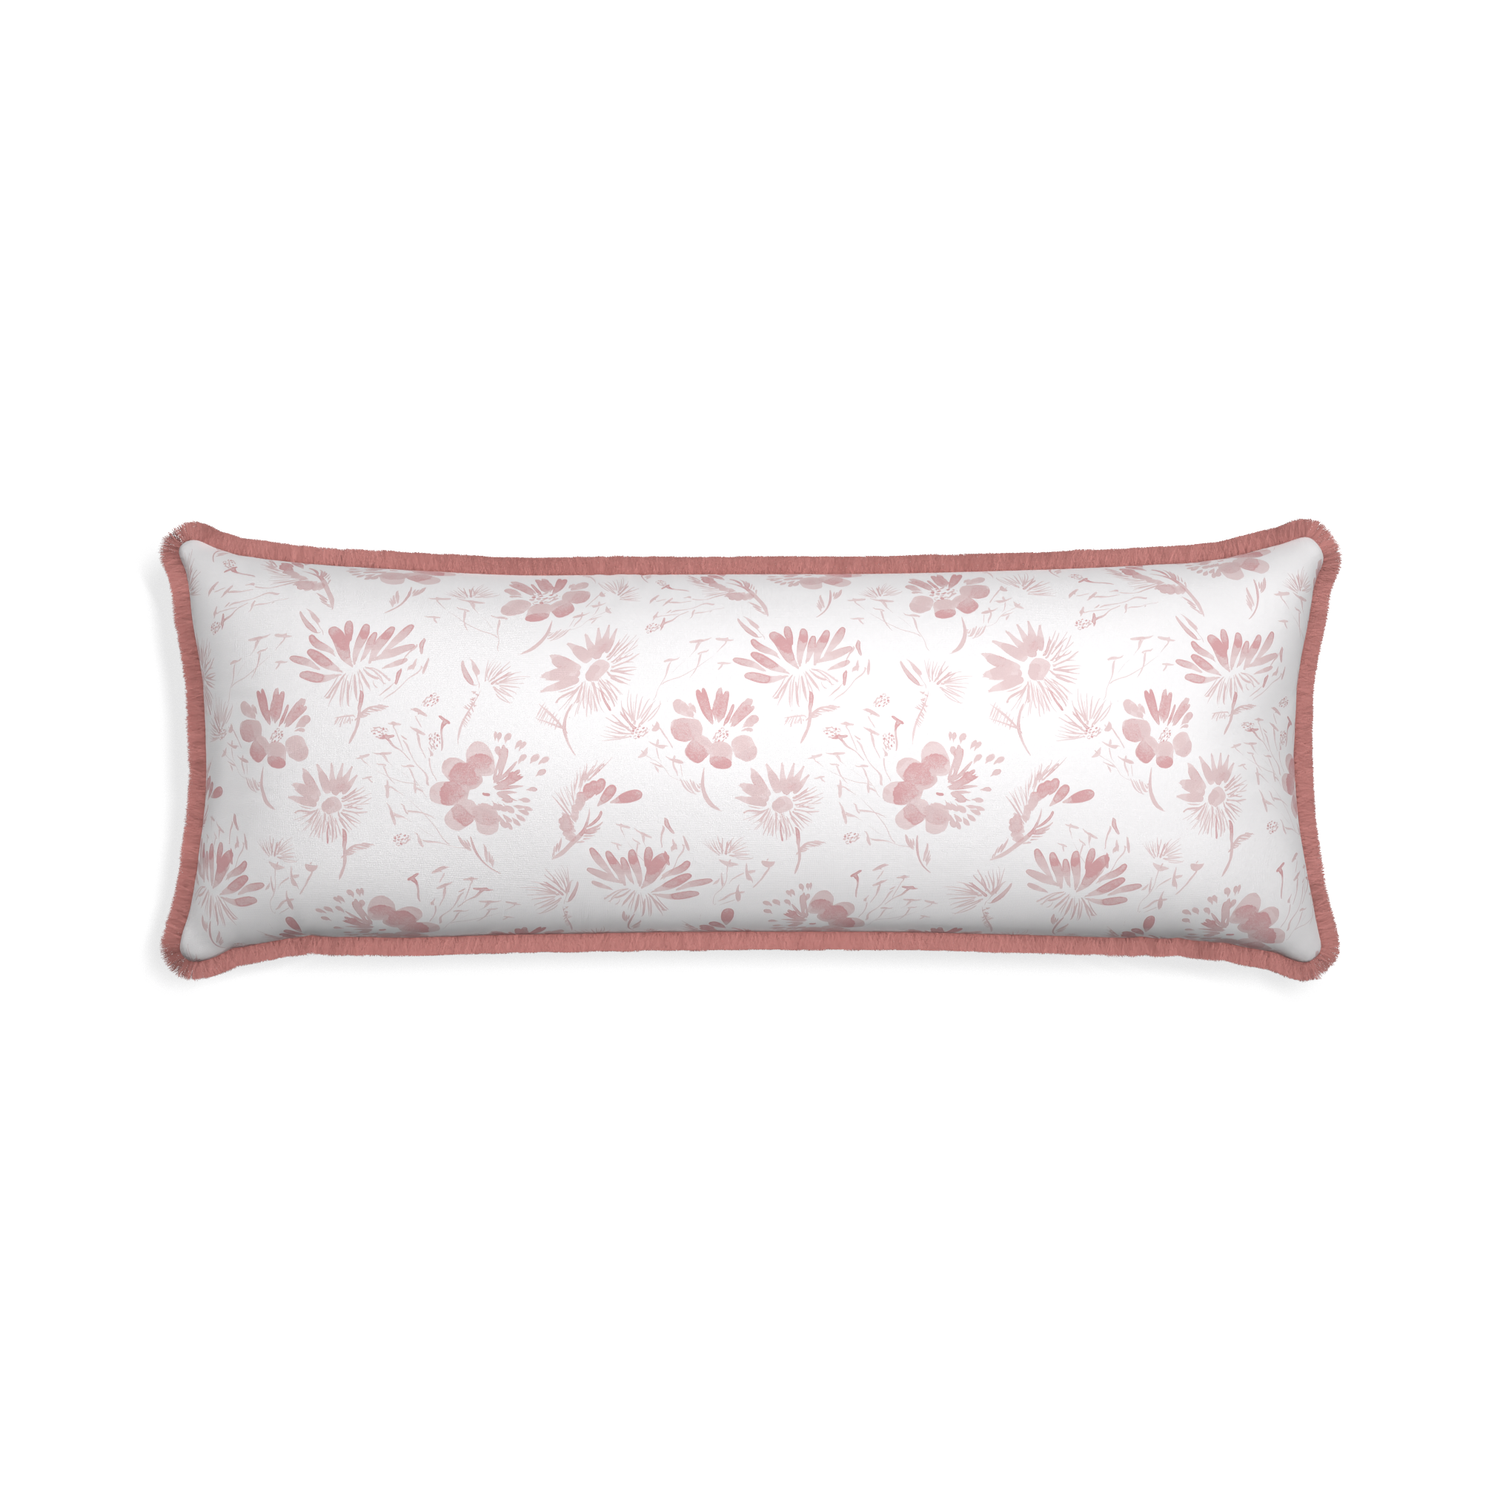 Xl-lumbar blake custom pillow with d fringe on white background